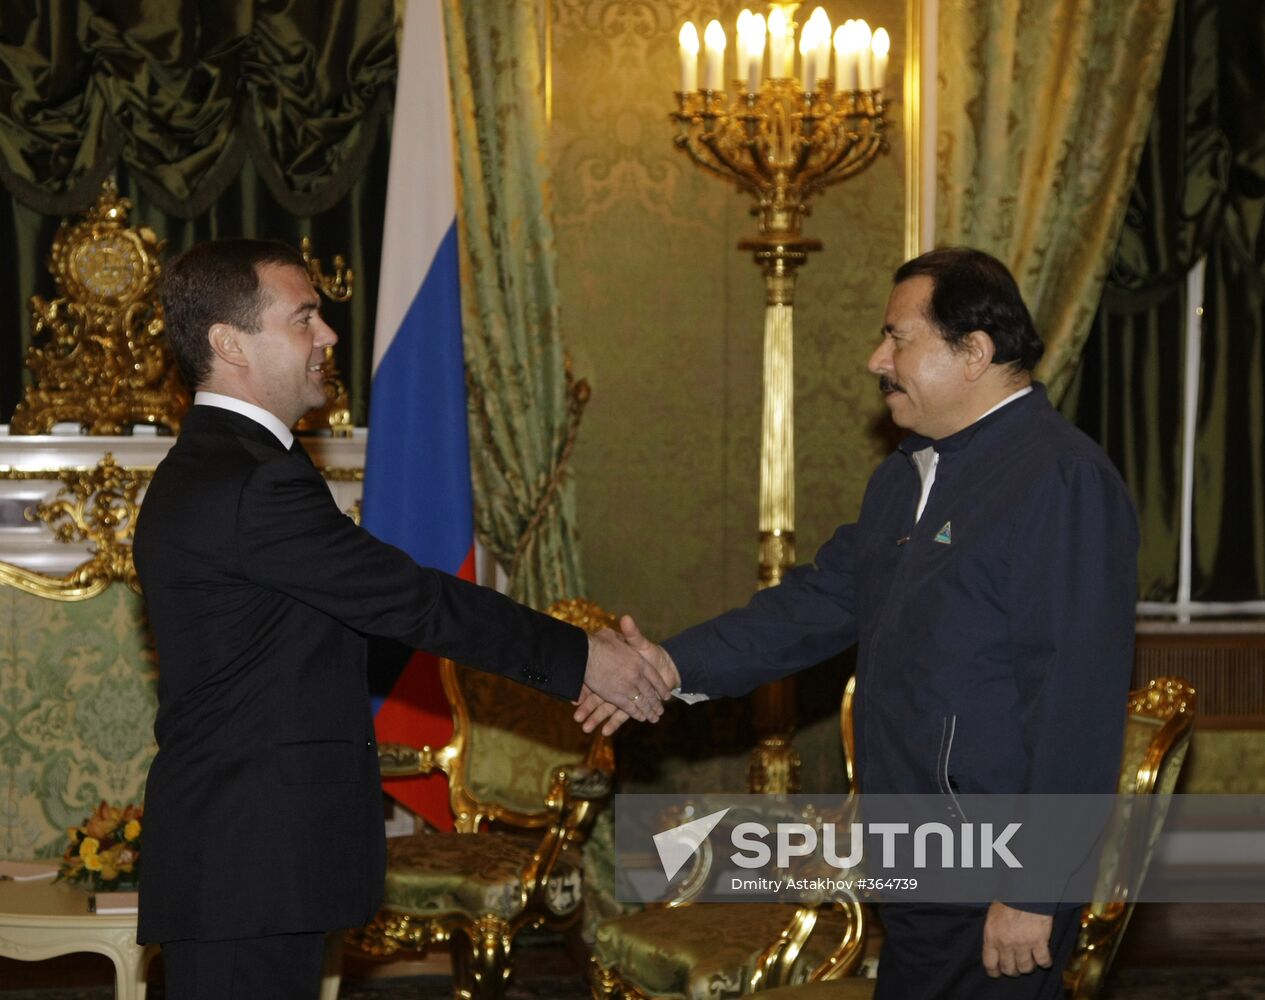 Daniel Ortega Saavedra paying official visit to Russia